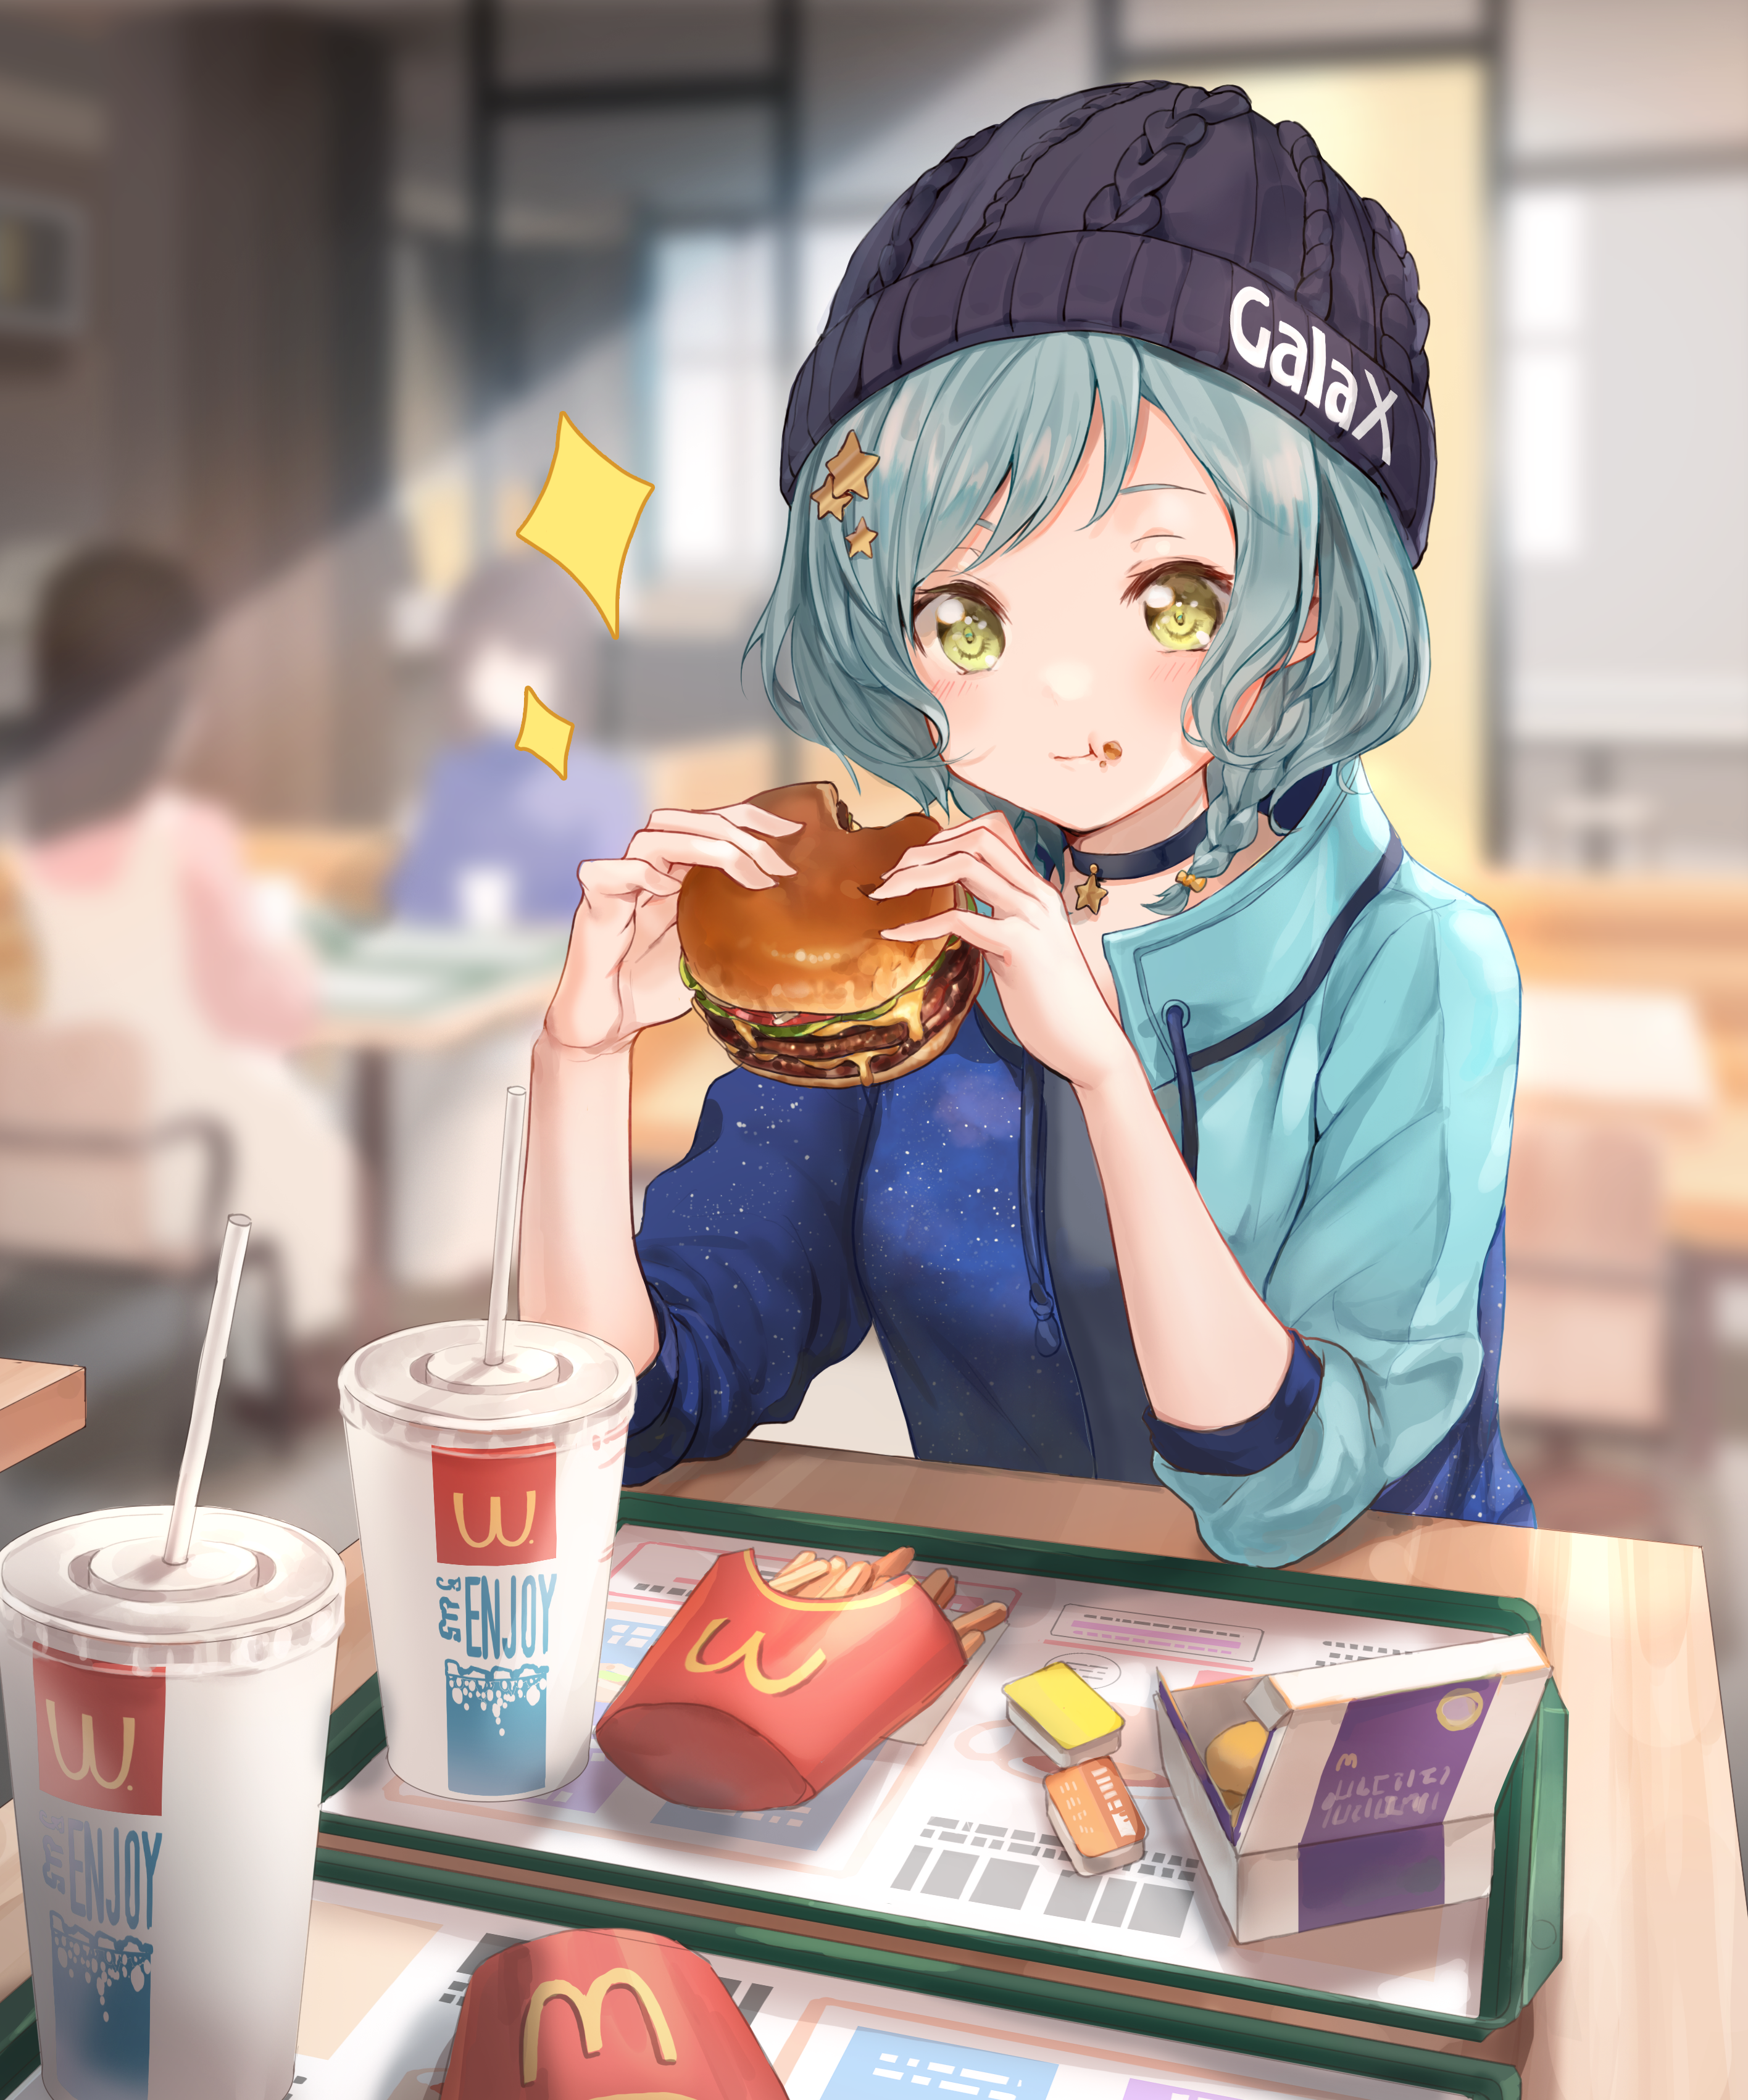 Anime 2832x3403 anime anime girls portrait display burgers food eating anime girls eating McDonald's hat fries drink stars choker blue hair green eyes fast food